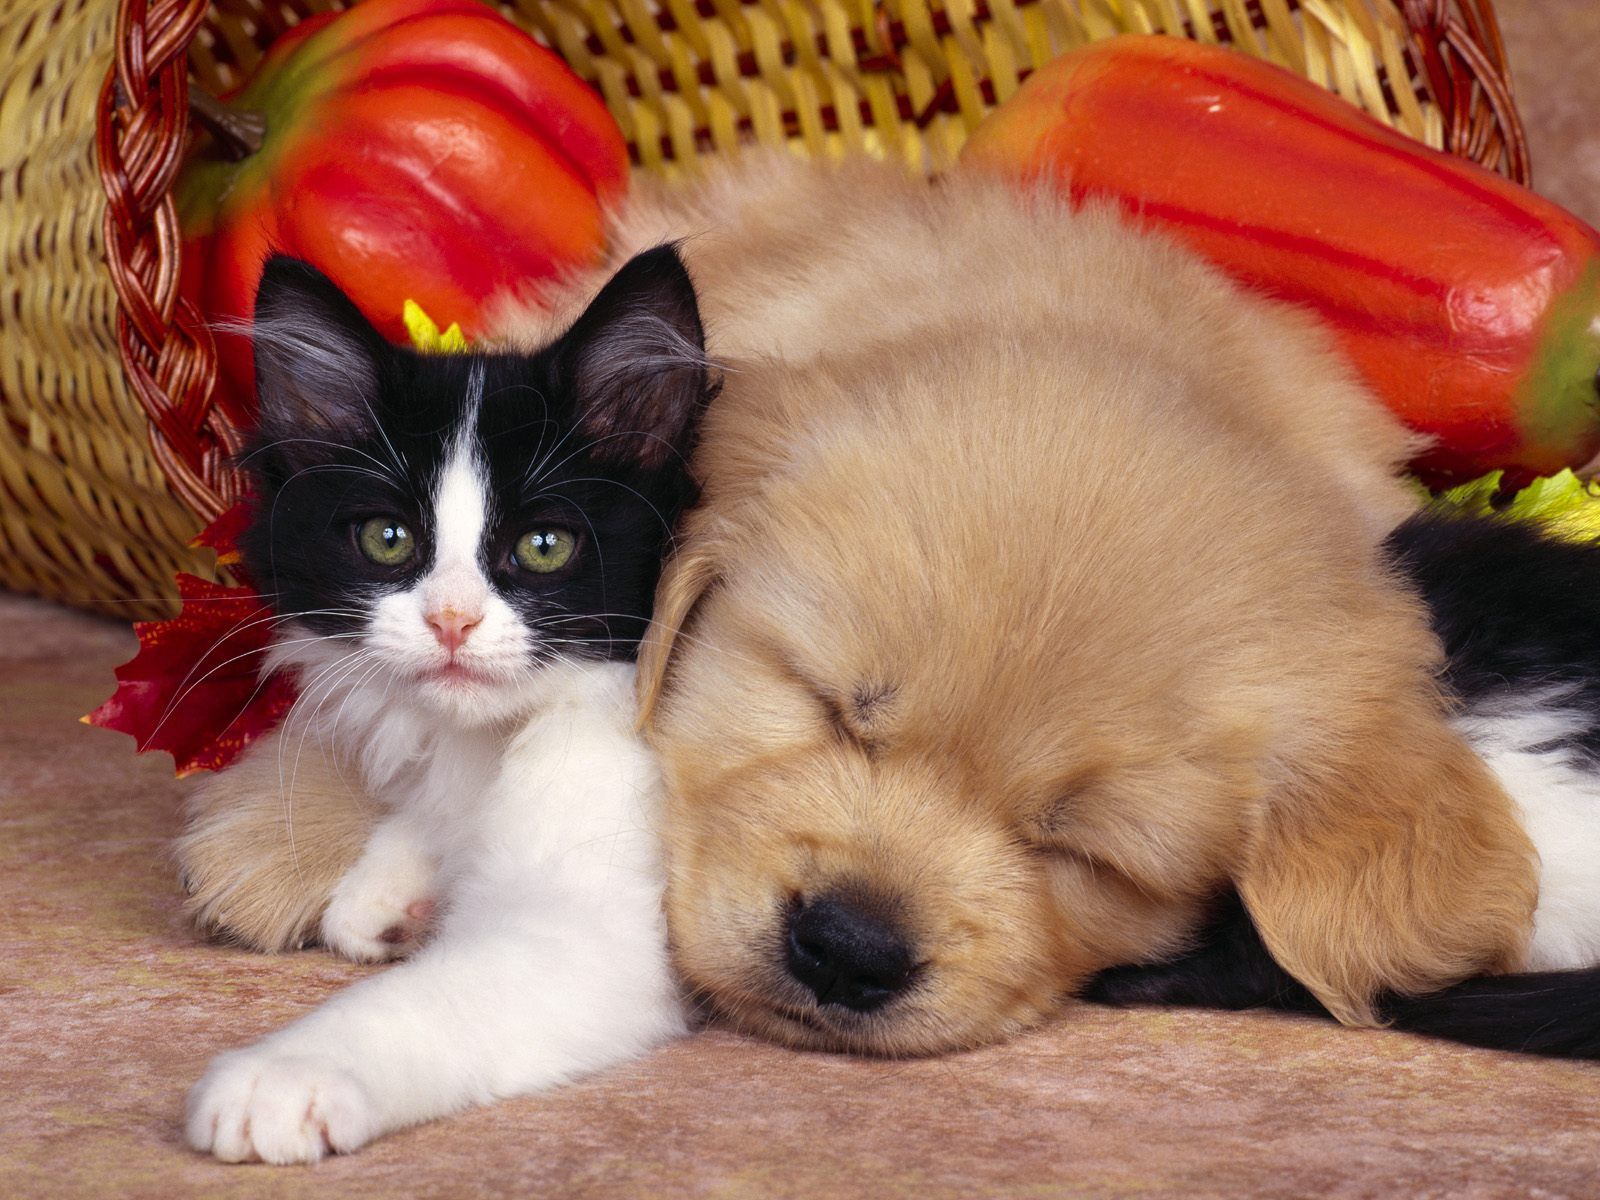 A !. Cuteness. Cute puppies, kittens, Cute cats, dogs, Animals